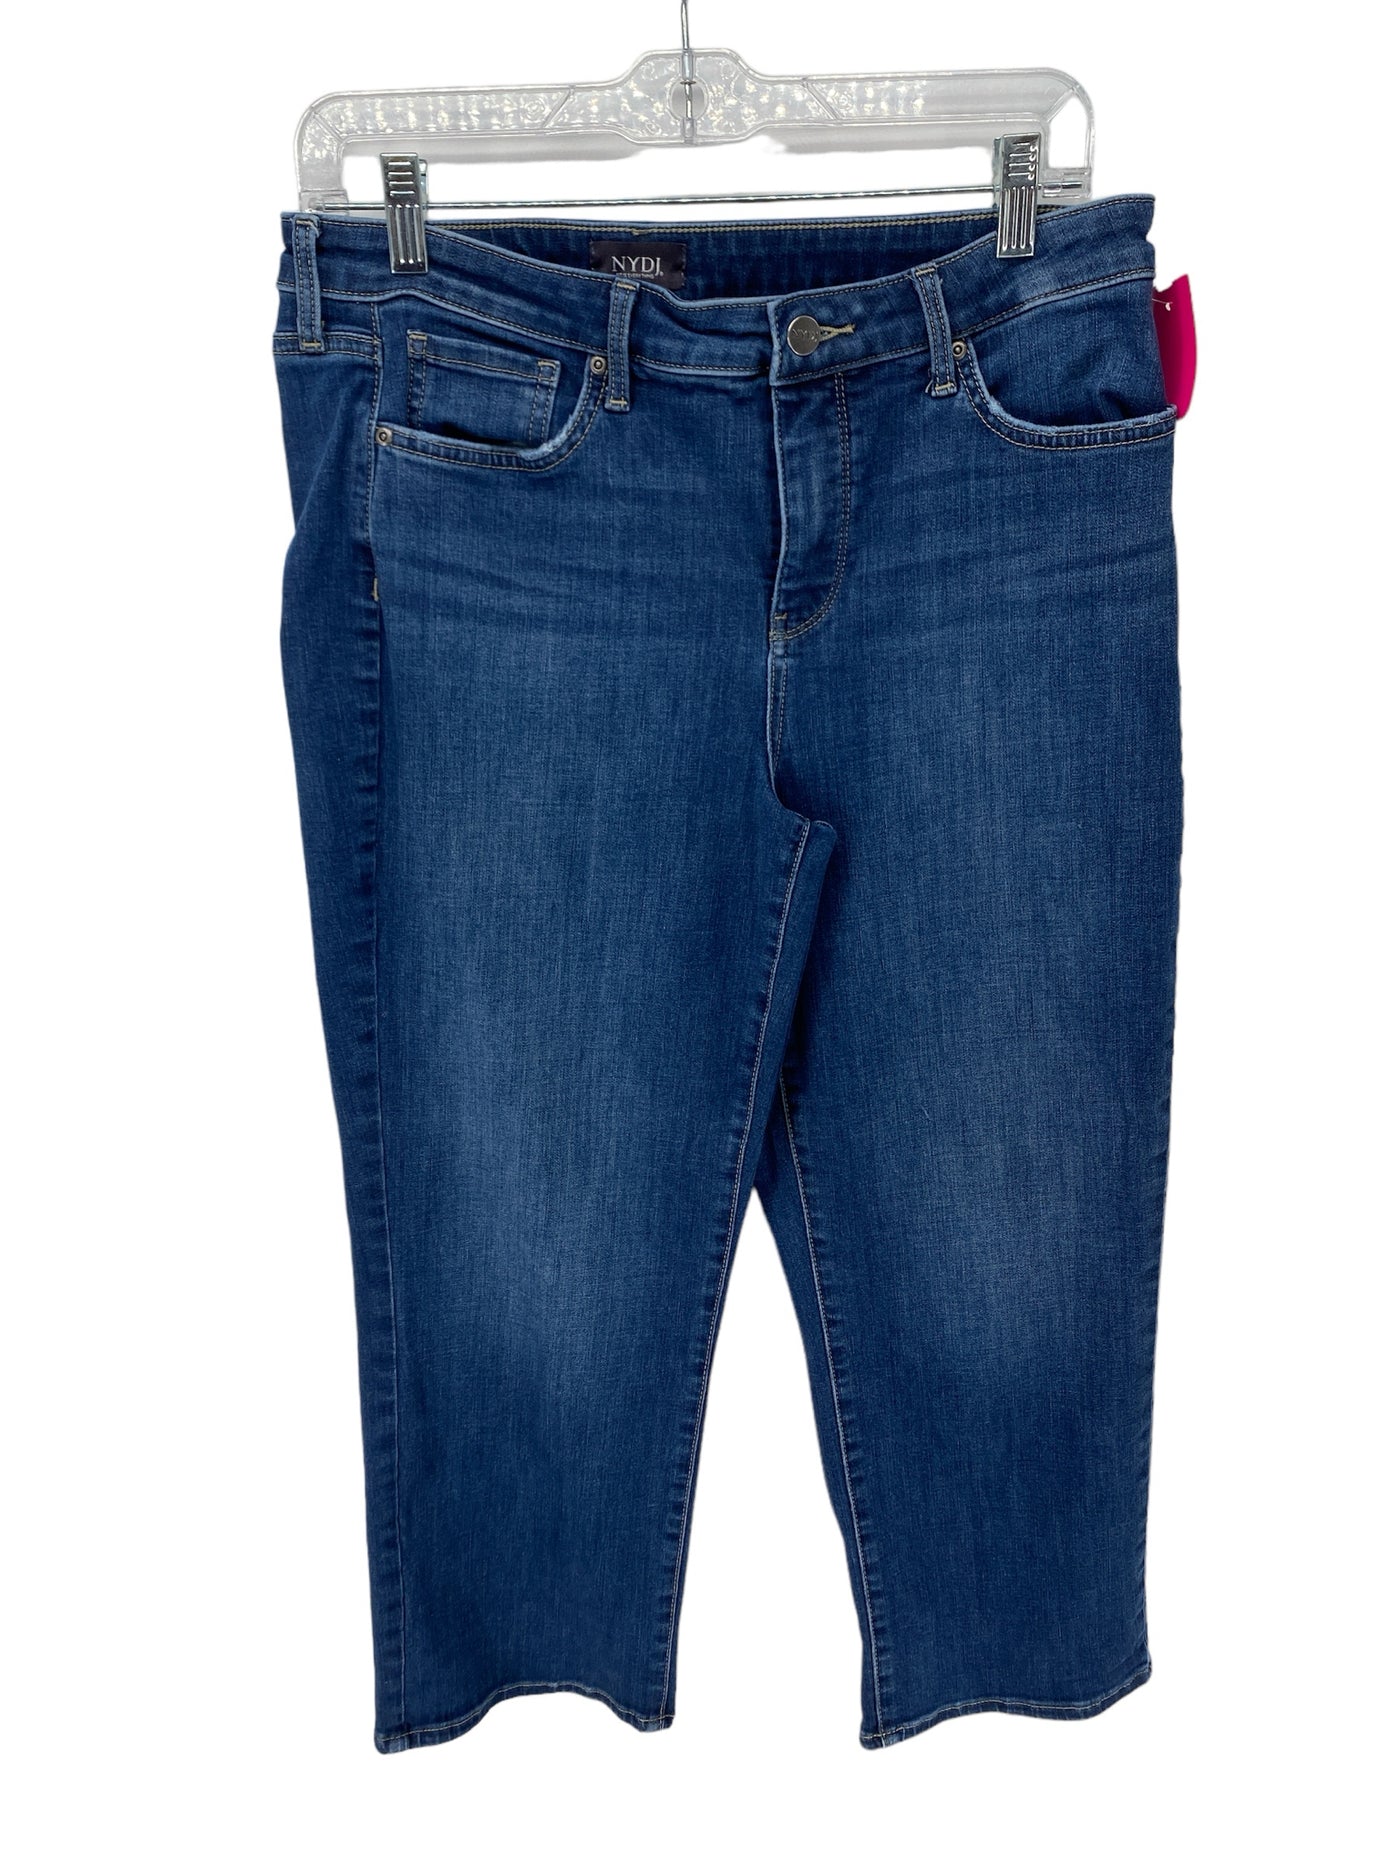 NYDJ Misses Size 10 Denim Jeans